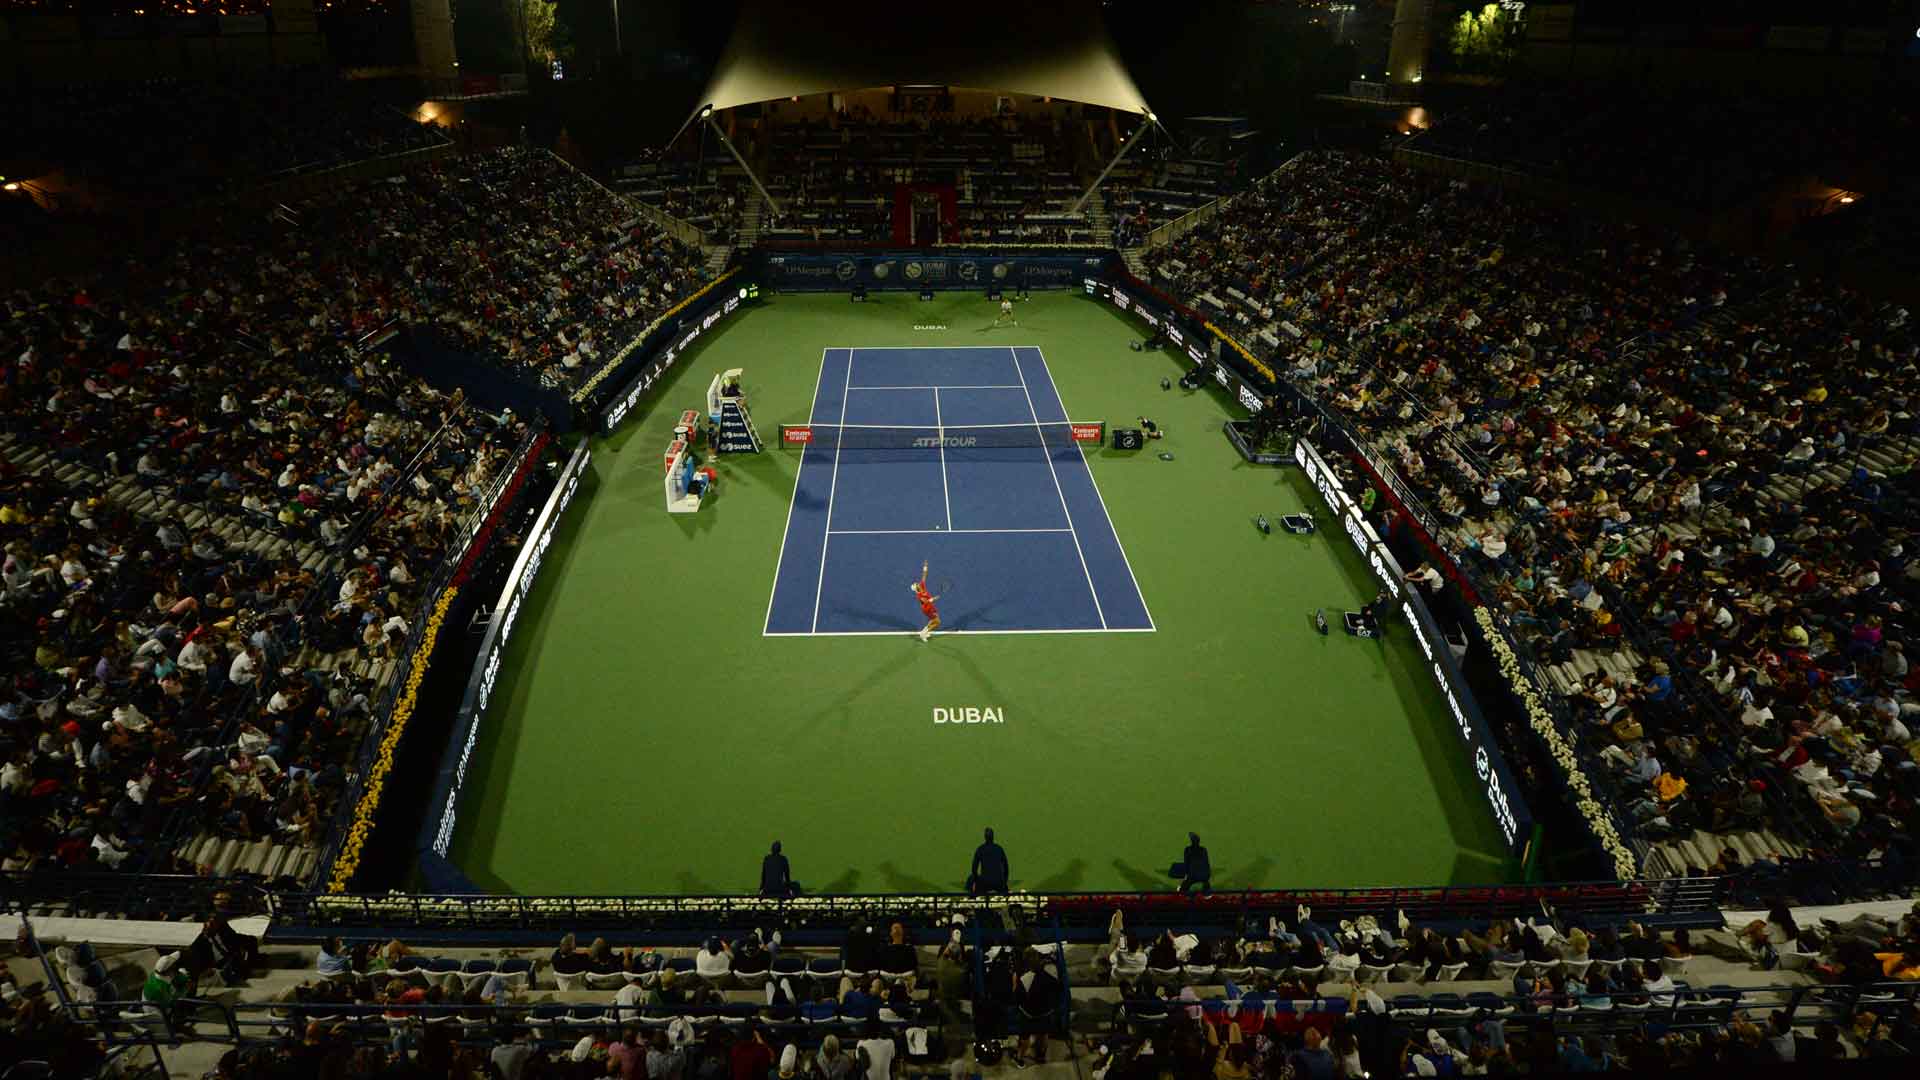 Dubai Duty Free Tennis Championships